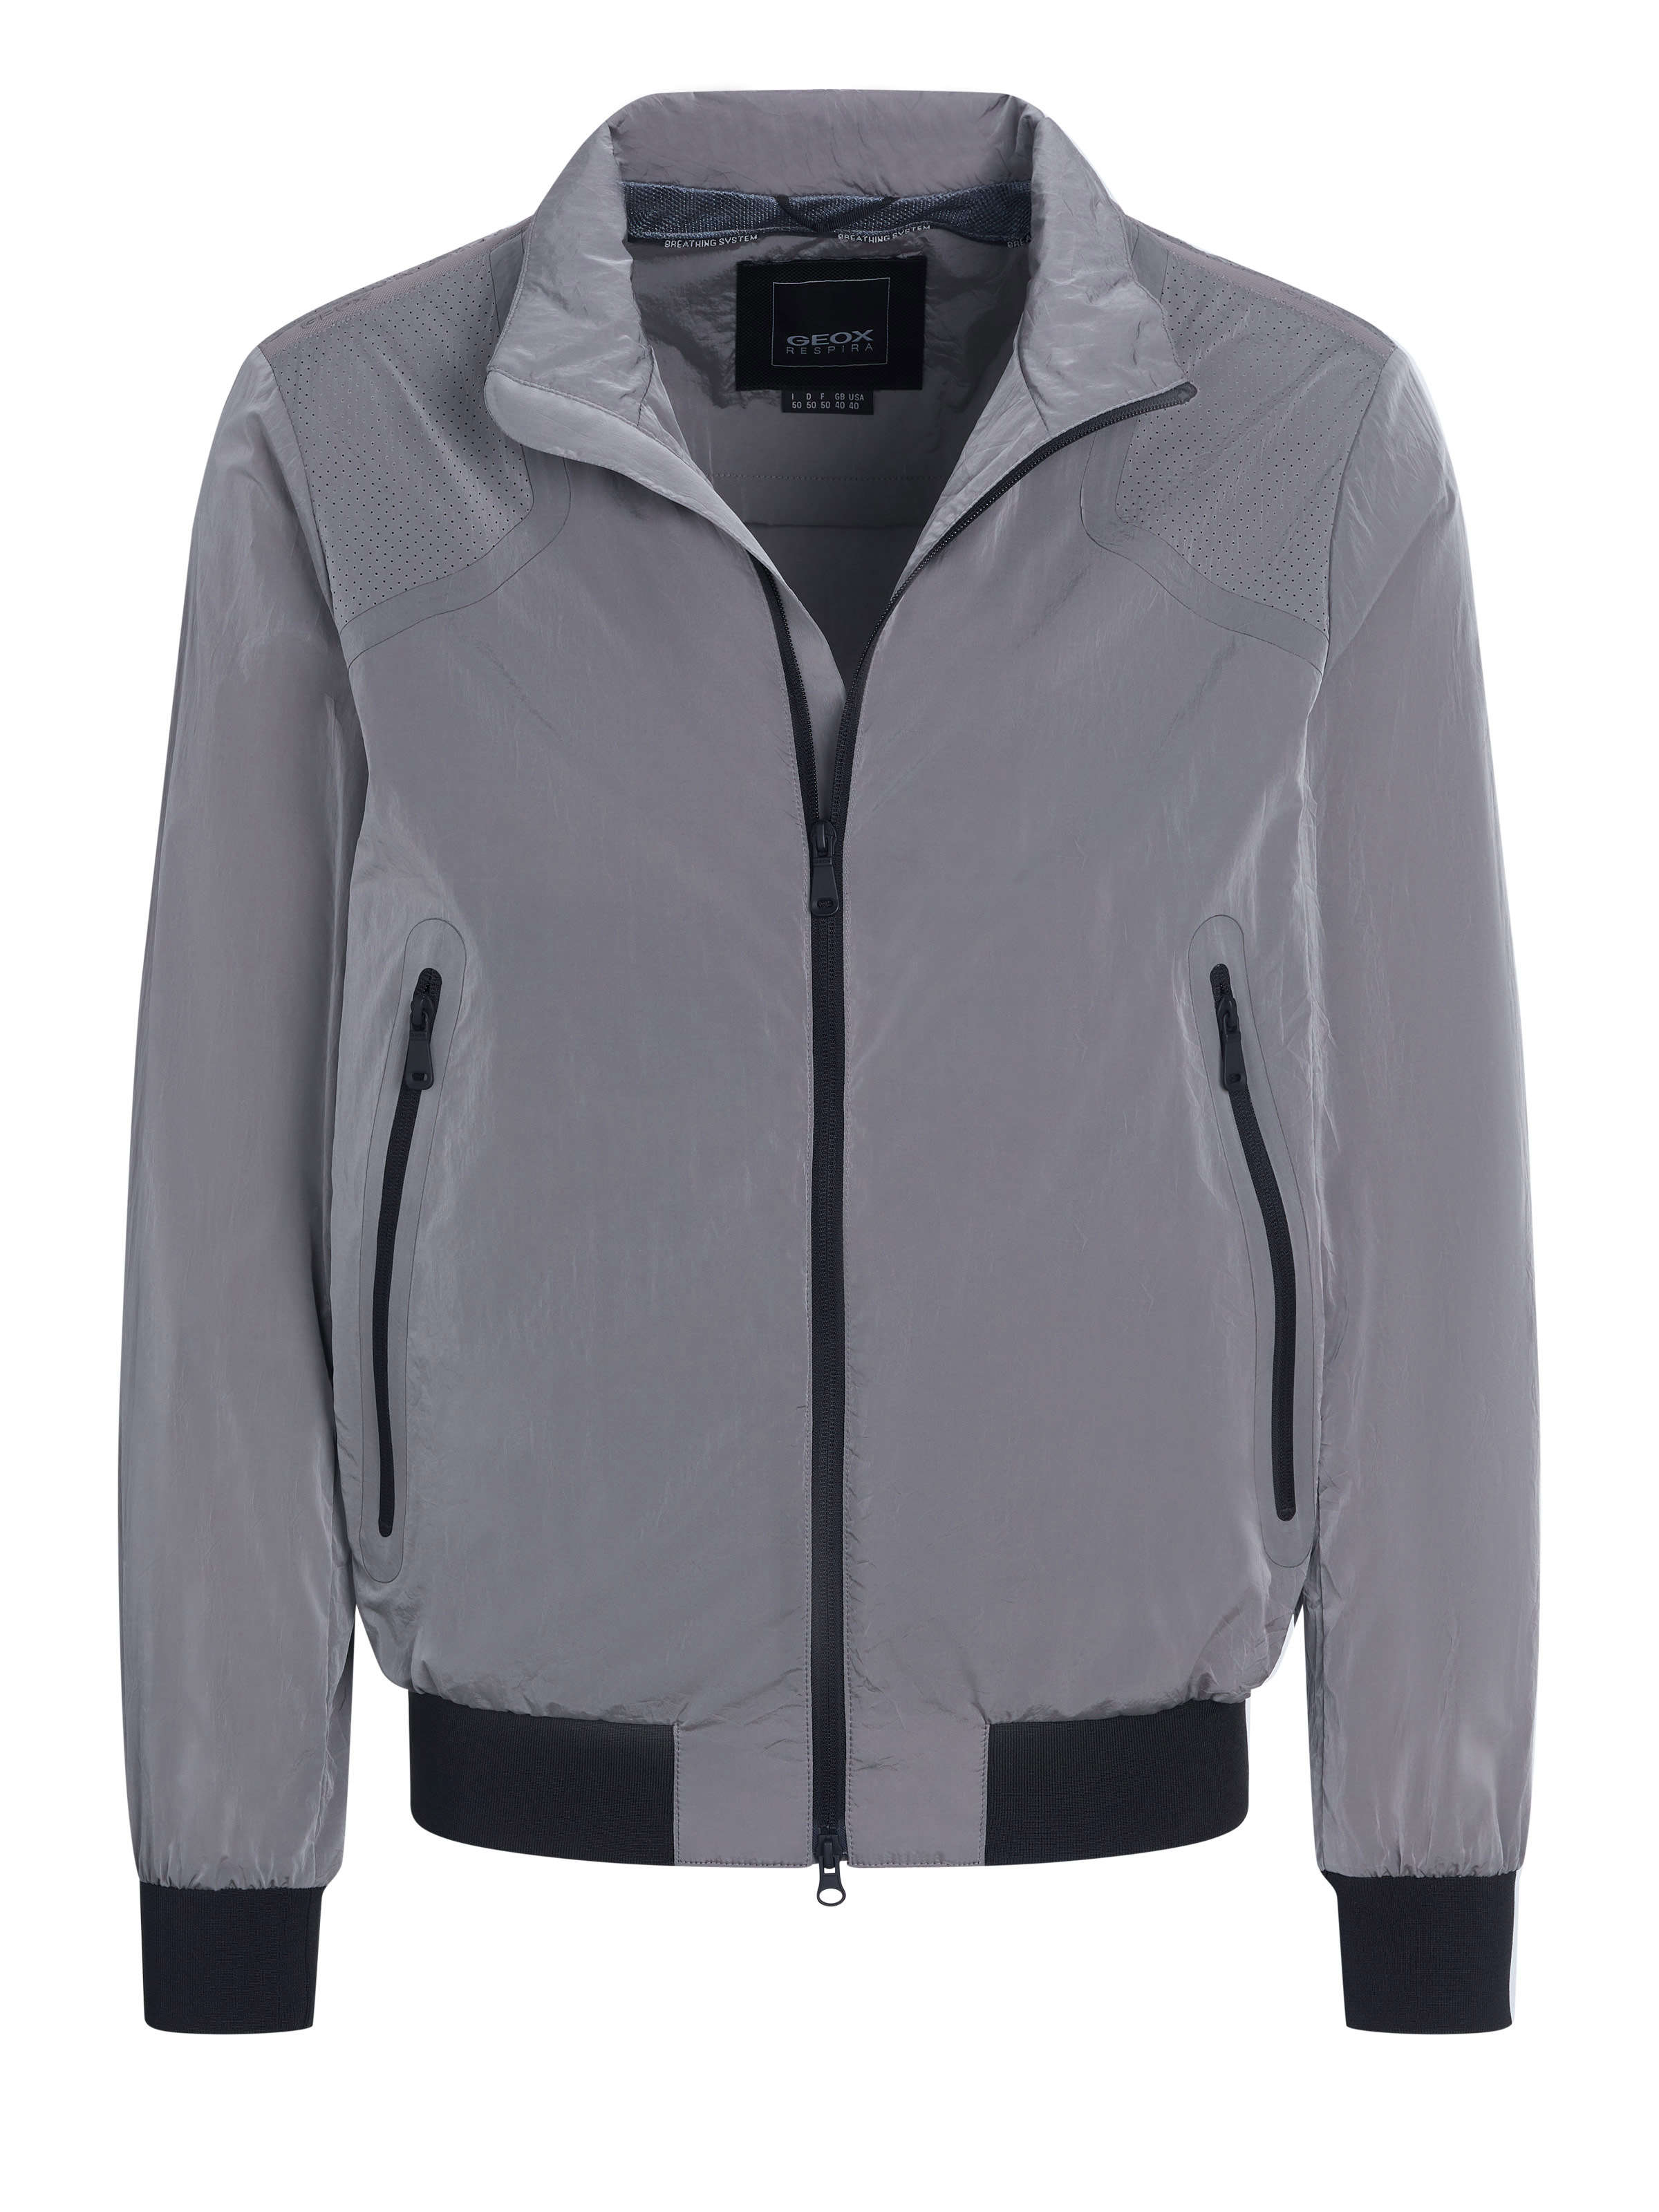 Jacket Grey on SALE |